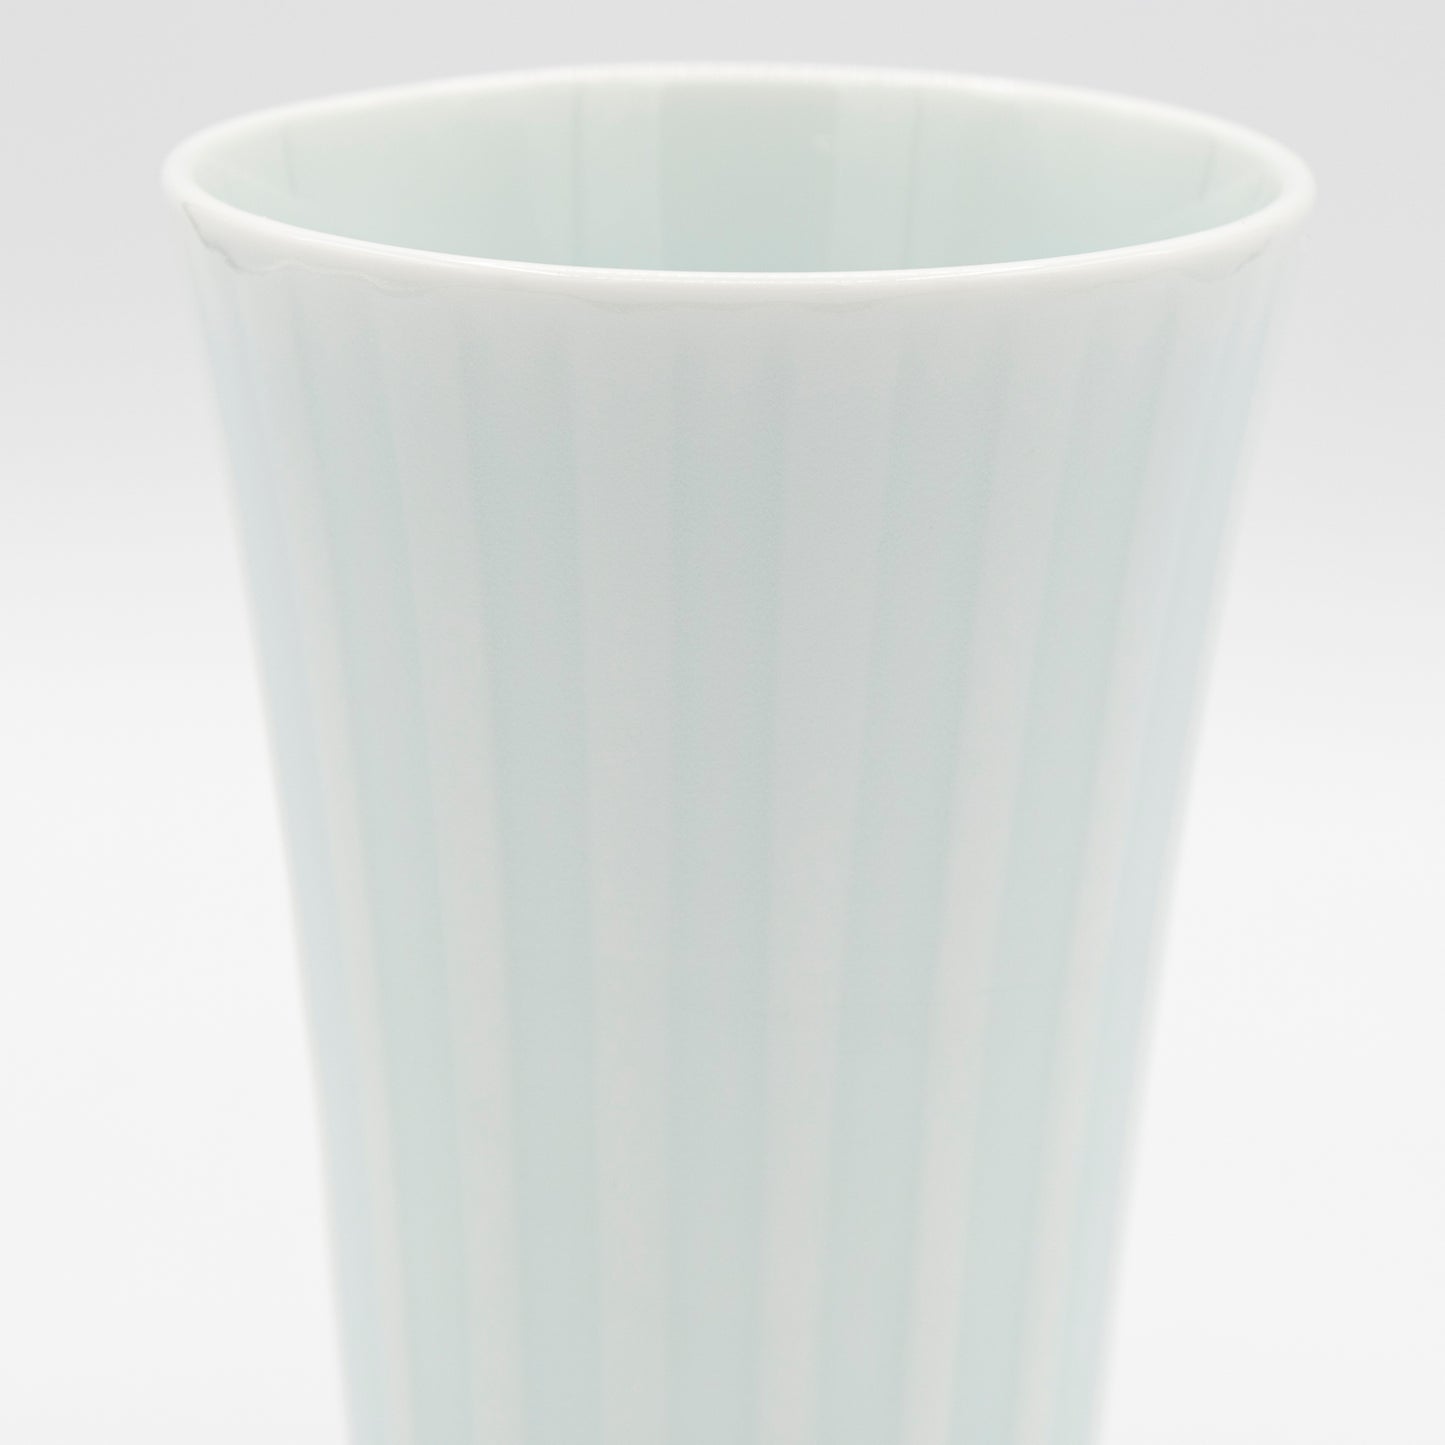 Kosengama - Porcelain Tokusa Cup - White and Blue